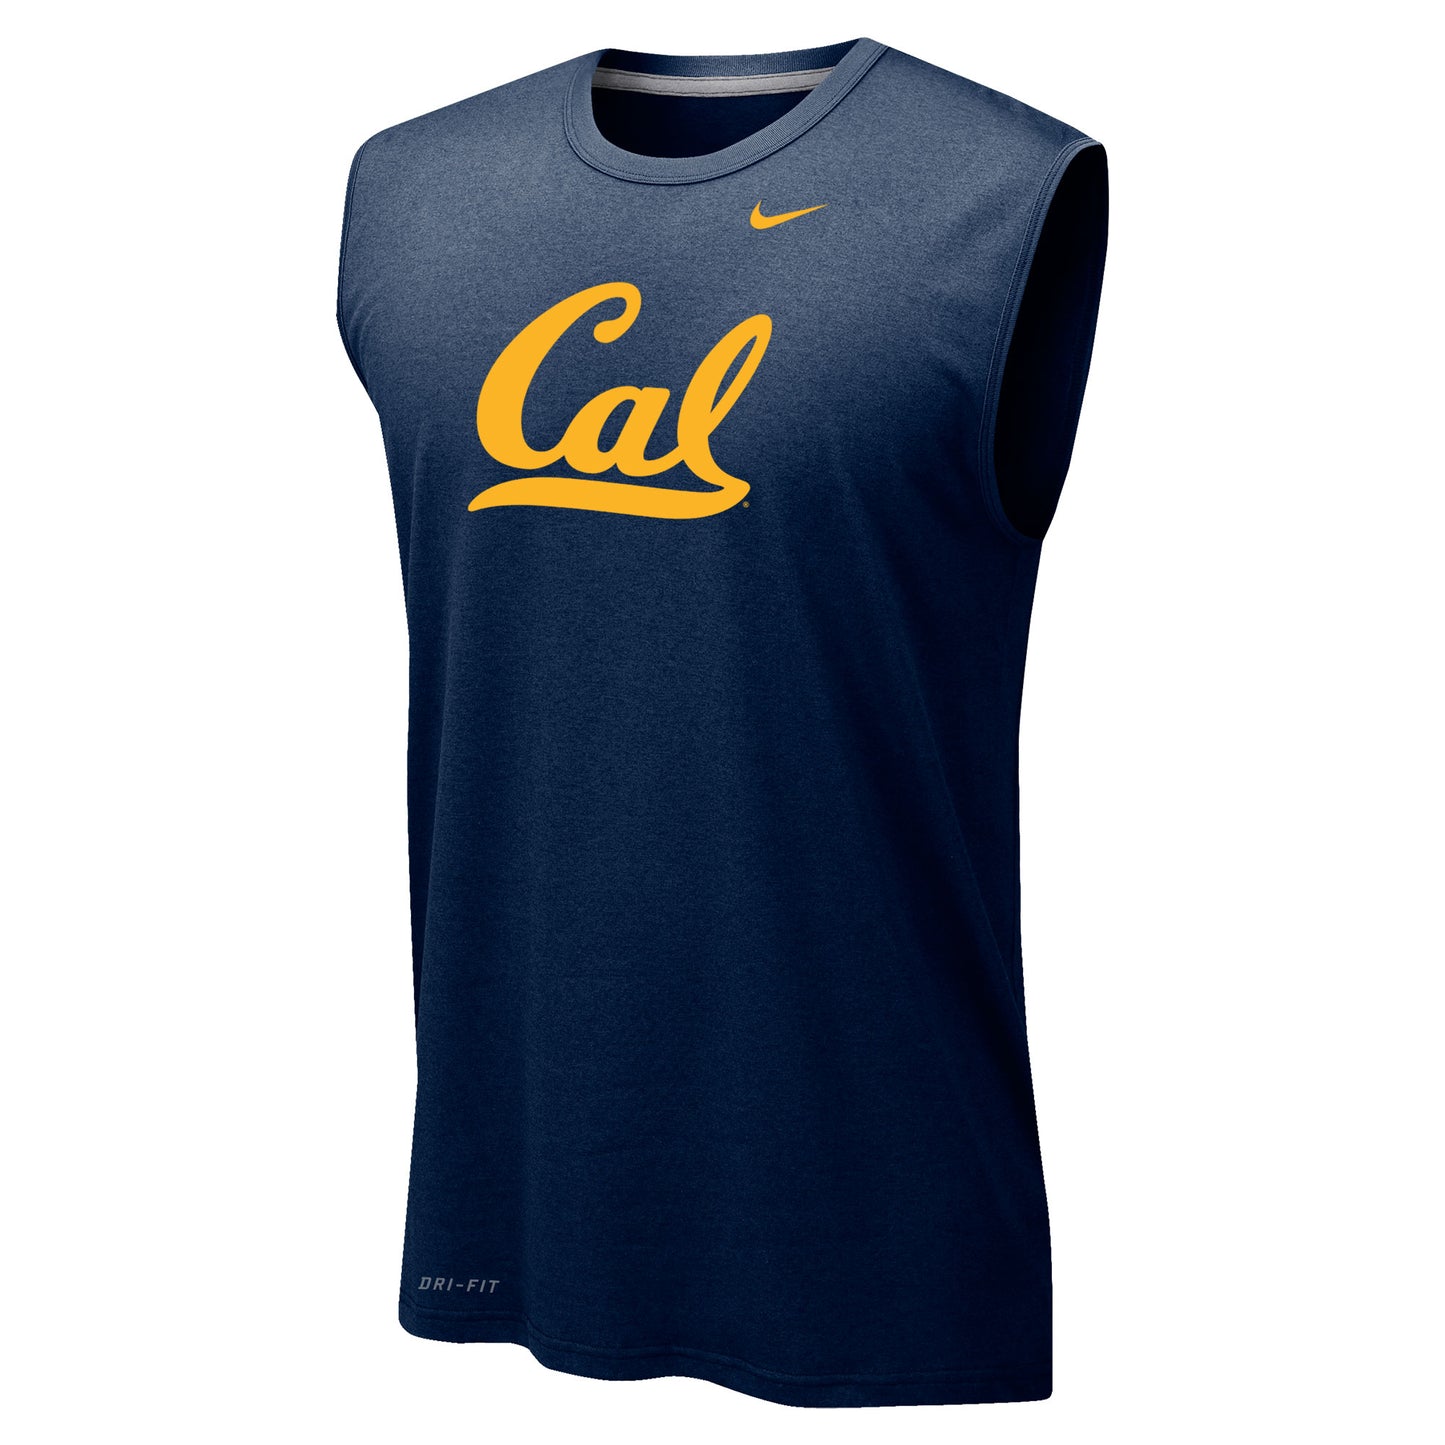 U.C. Berkeley Cal Nike sleeveless T-Shirt-Navy-Shop College Wear